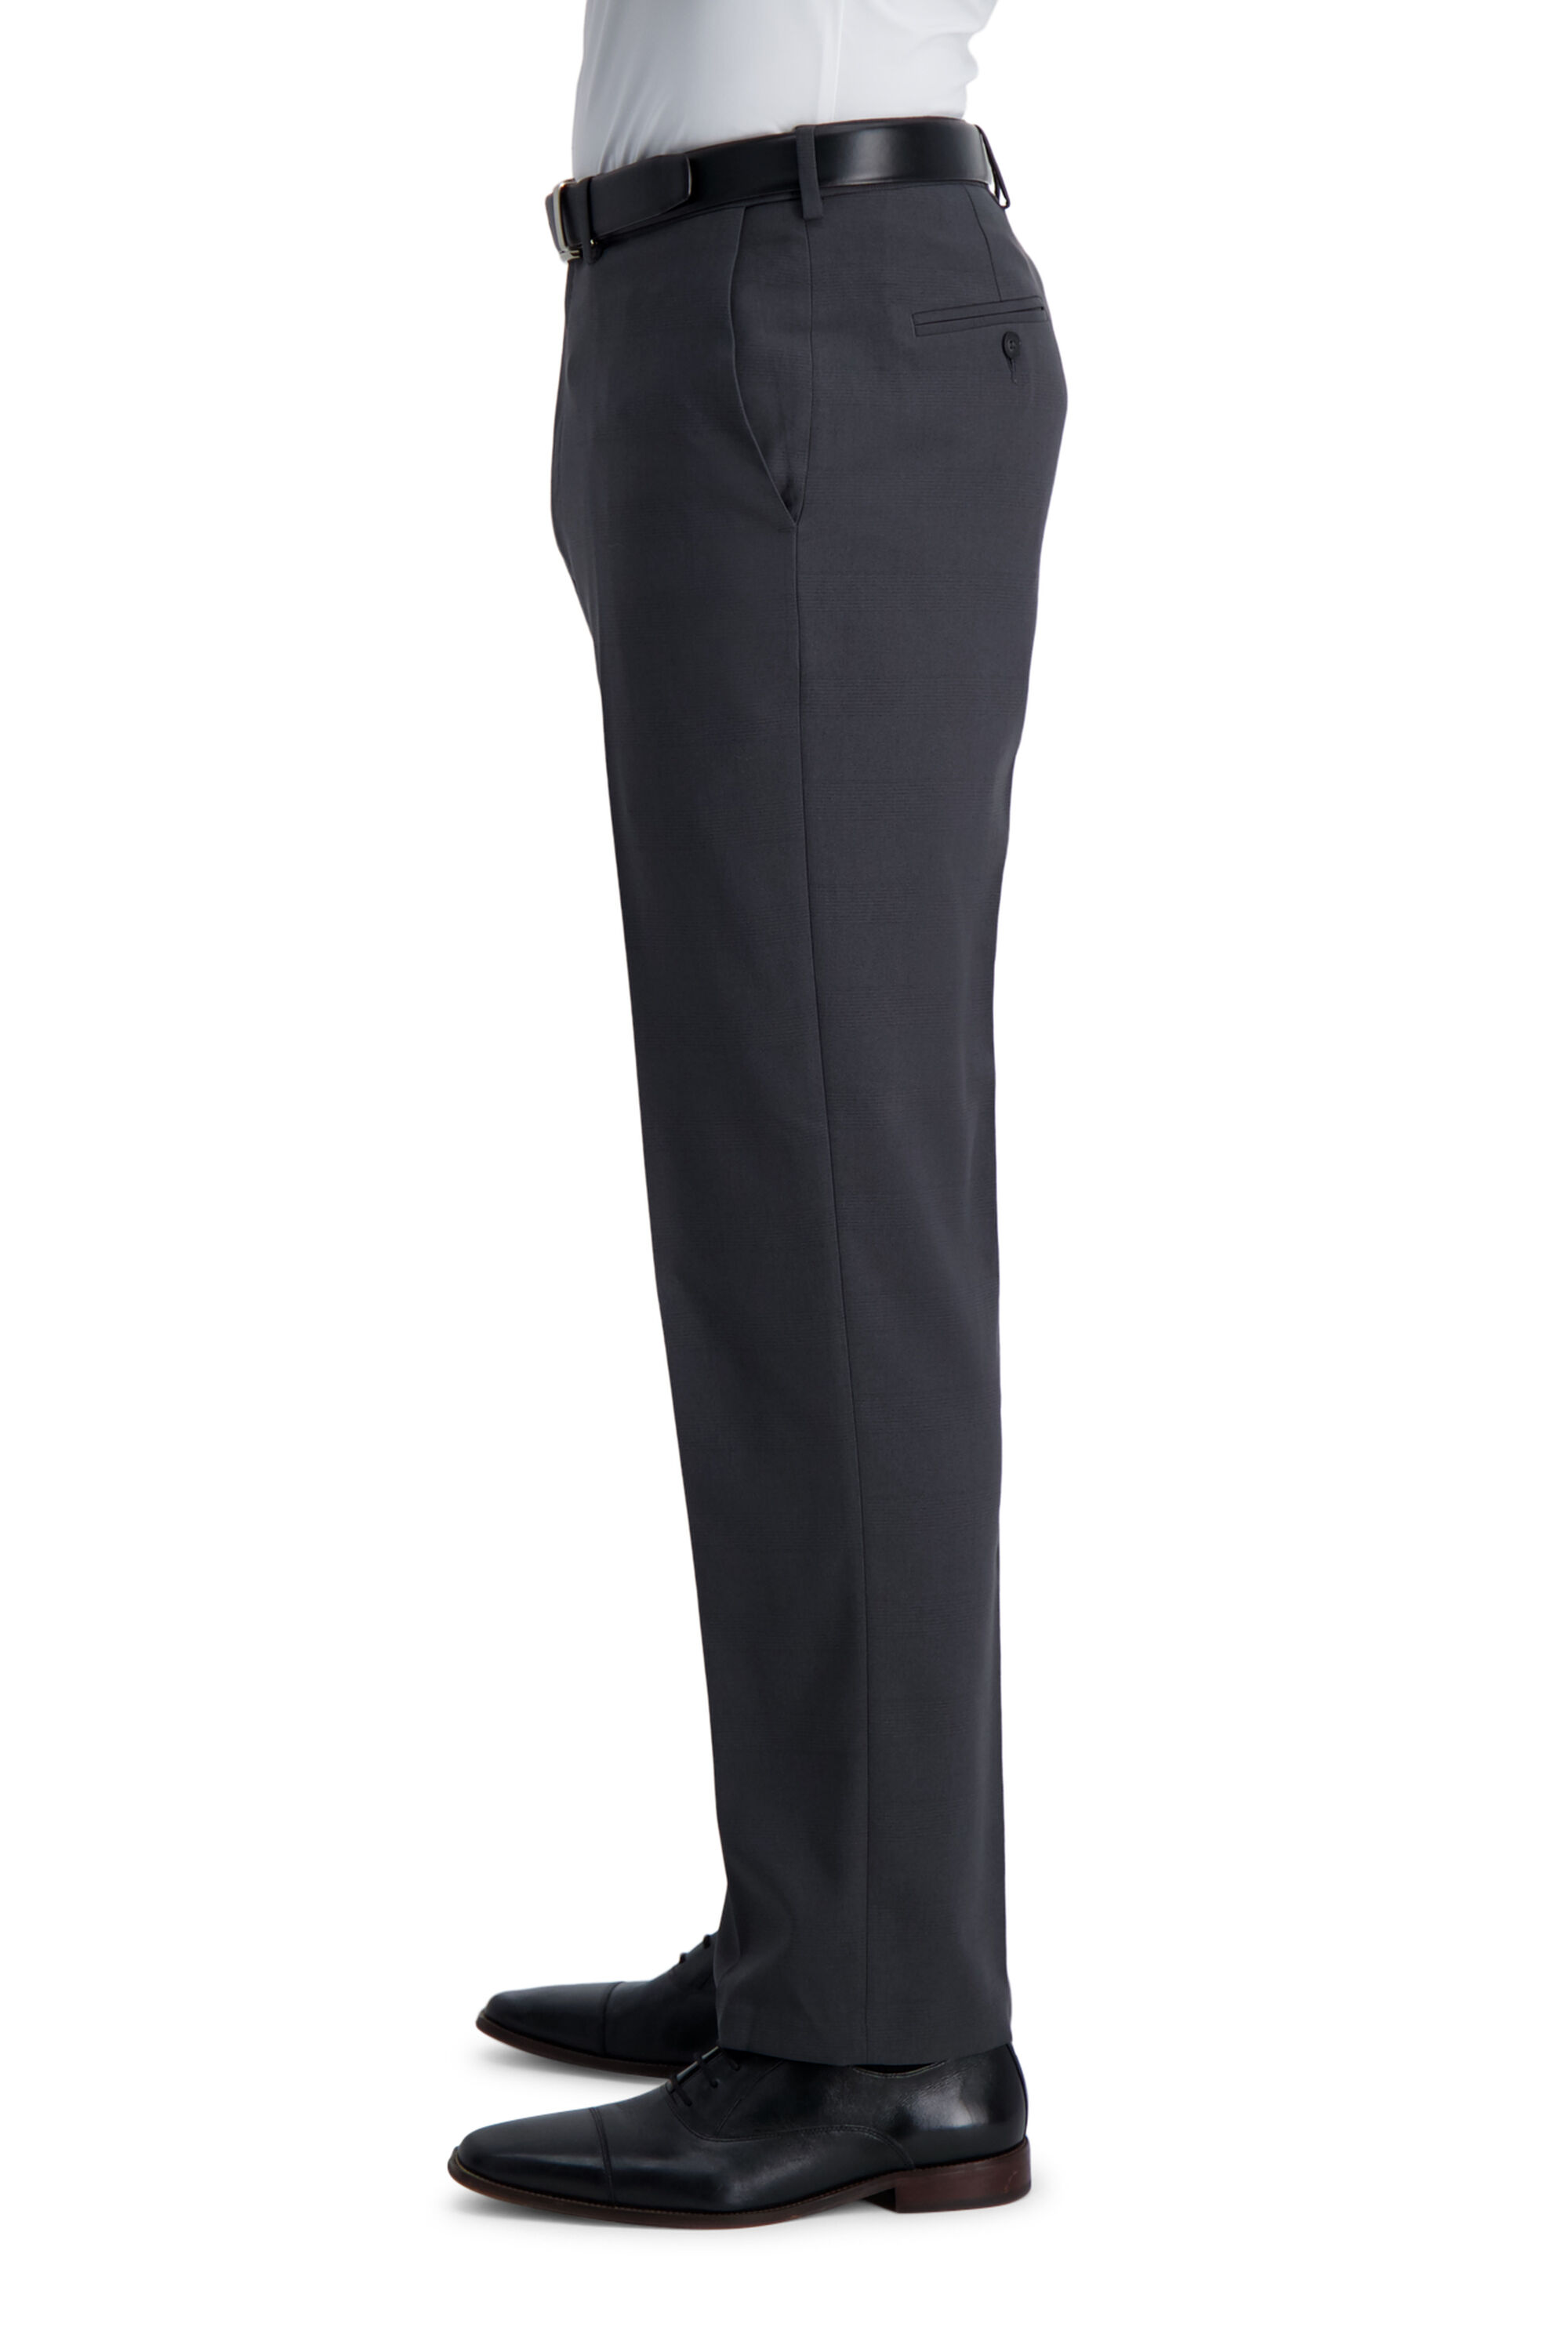 Premium Comfort Dress Pant - Tonal Glen Plaid